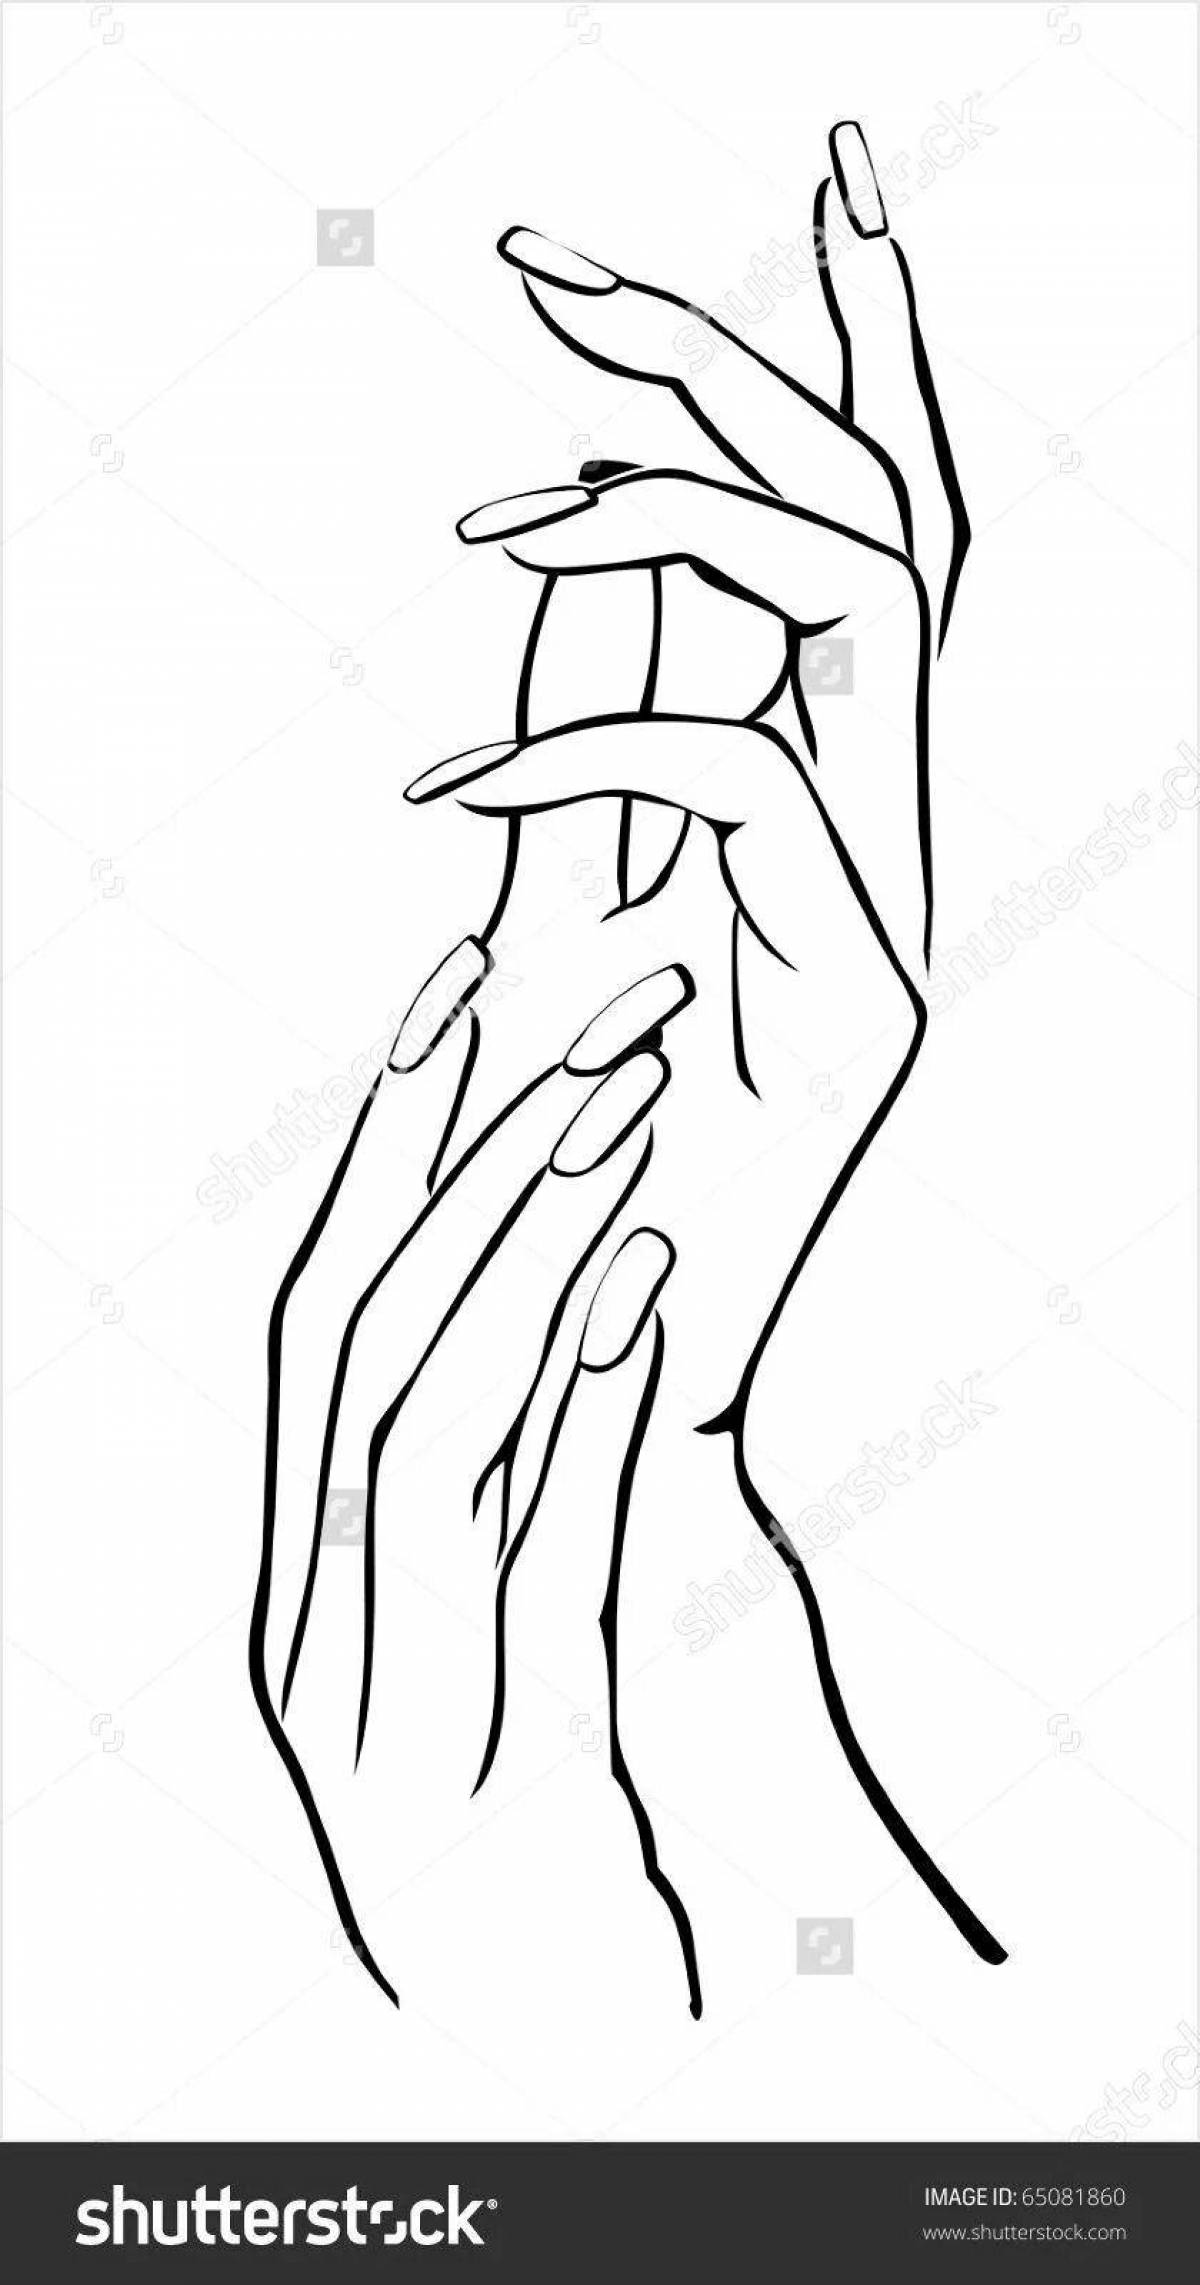 Раскраска праздничная женская рука